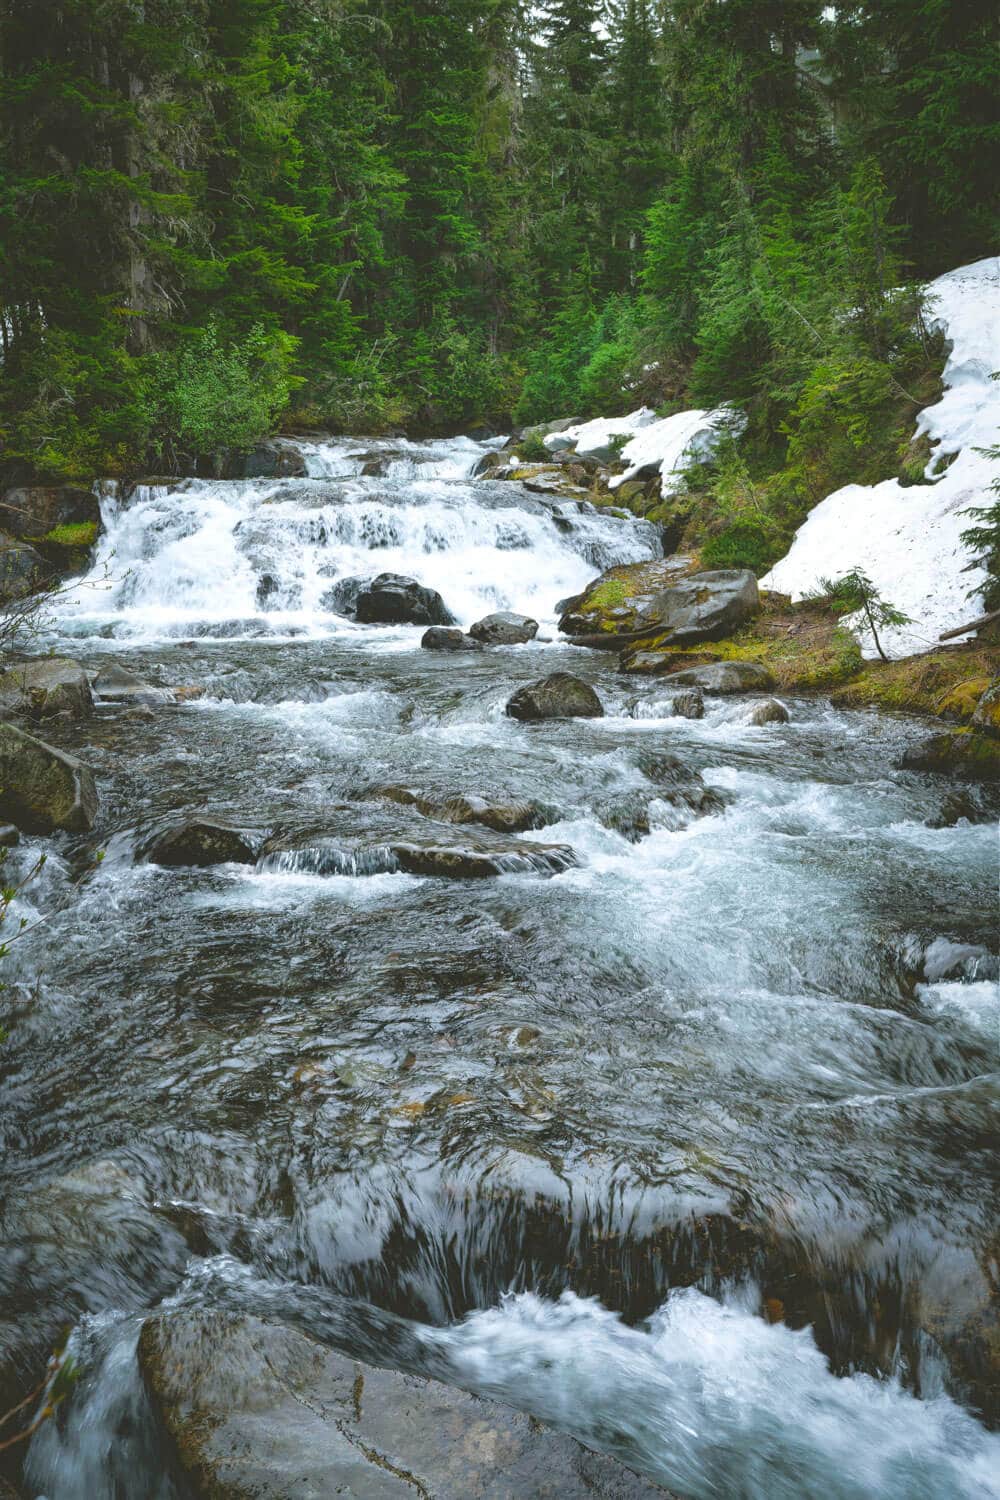 Waterfalls and pine trees near Puget Sound, Washington.